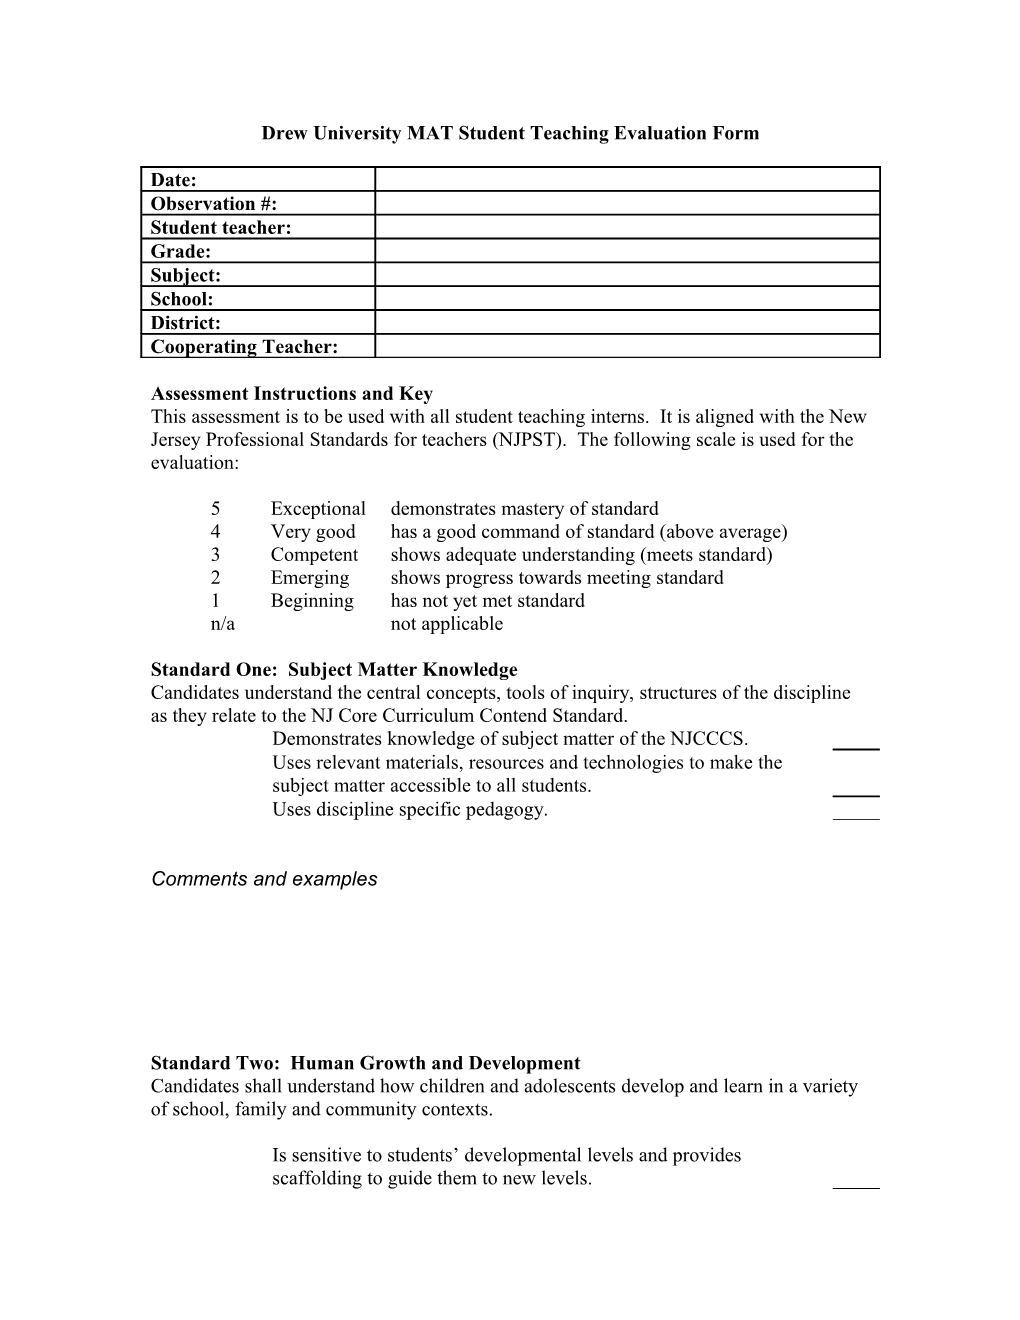 Drew University MAT Student Teaching Evaluation Form